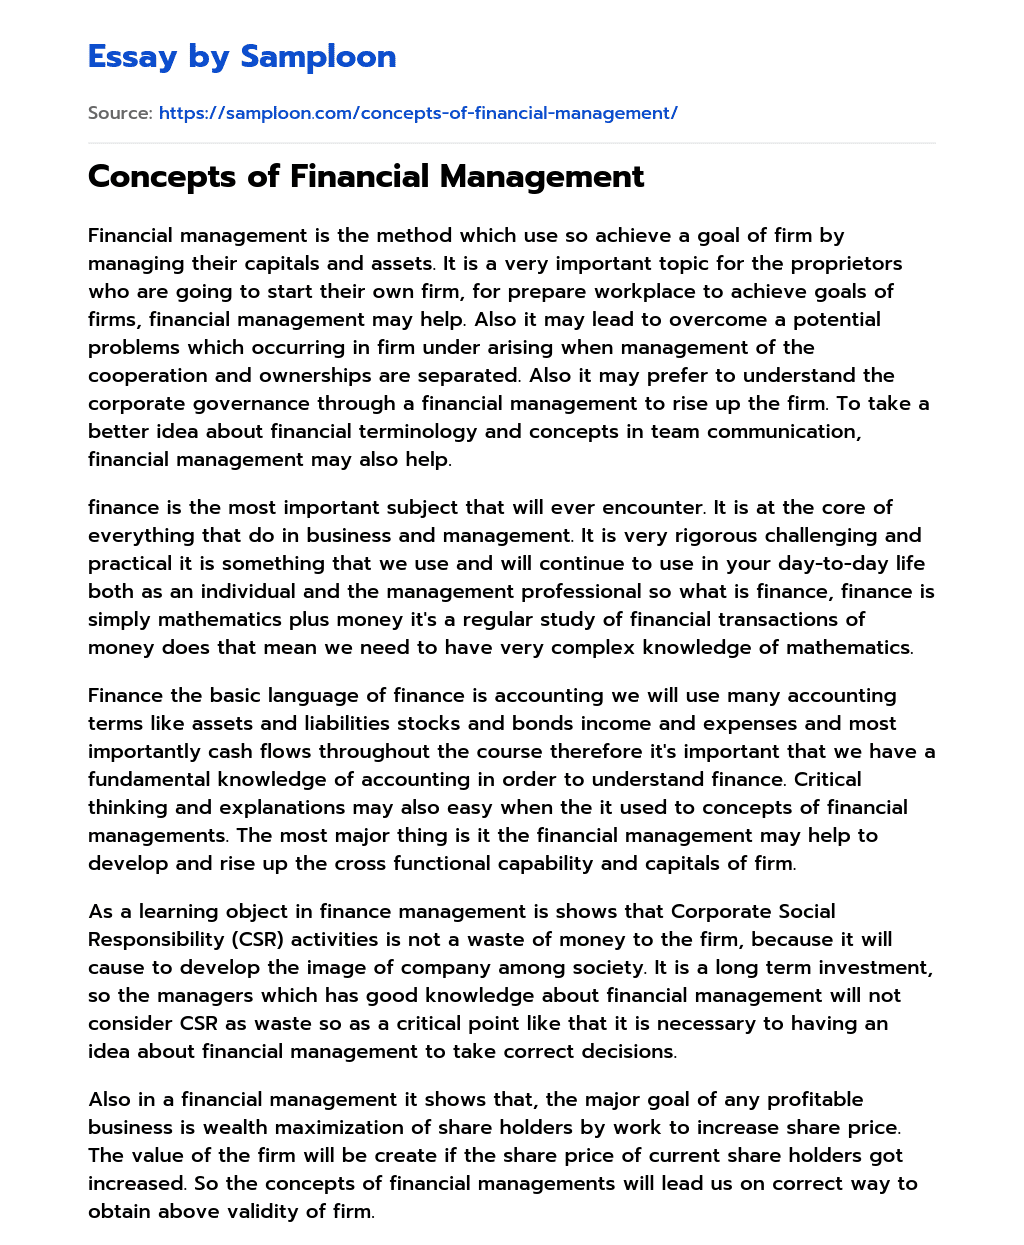 Concepts of Financial Management essay